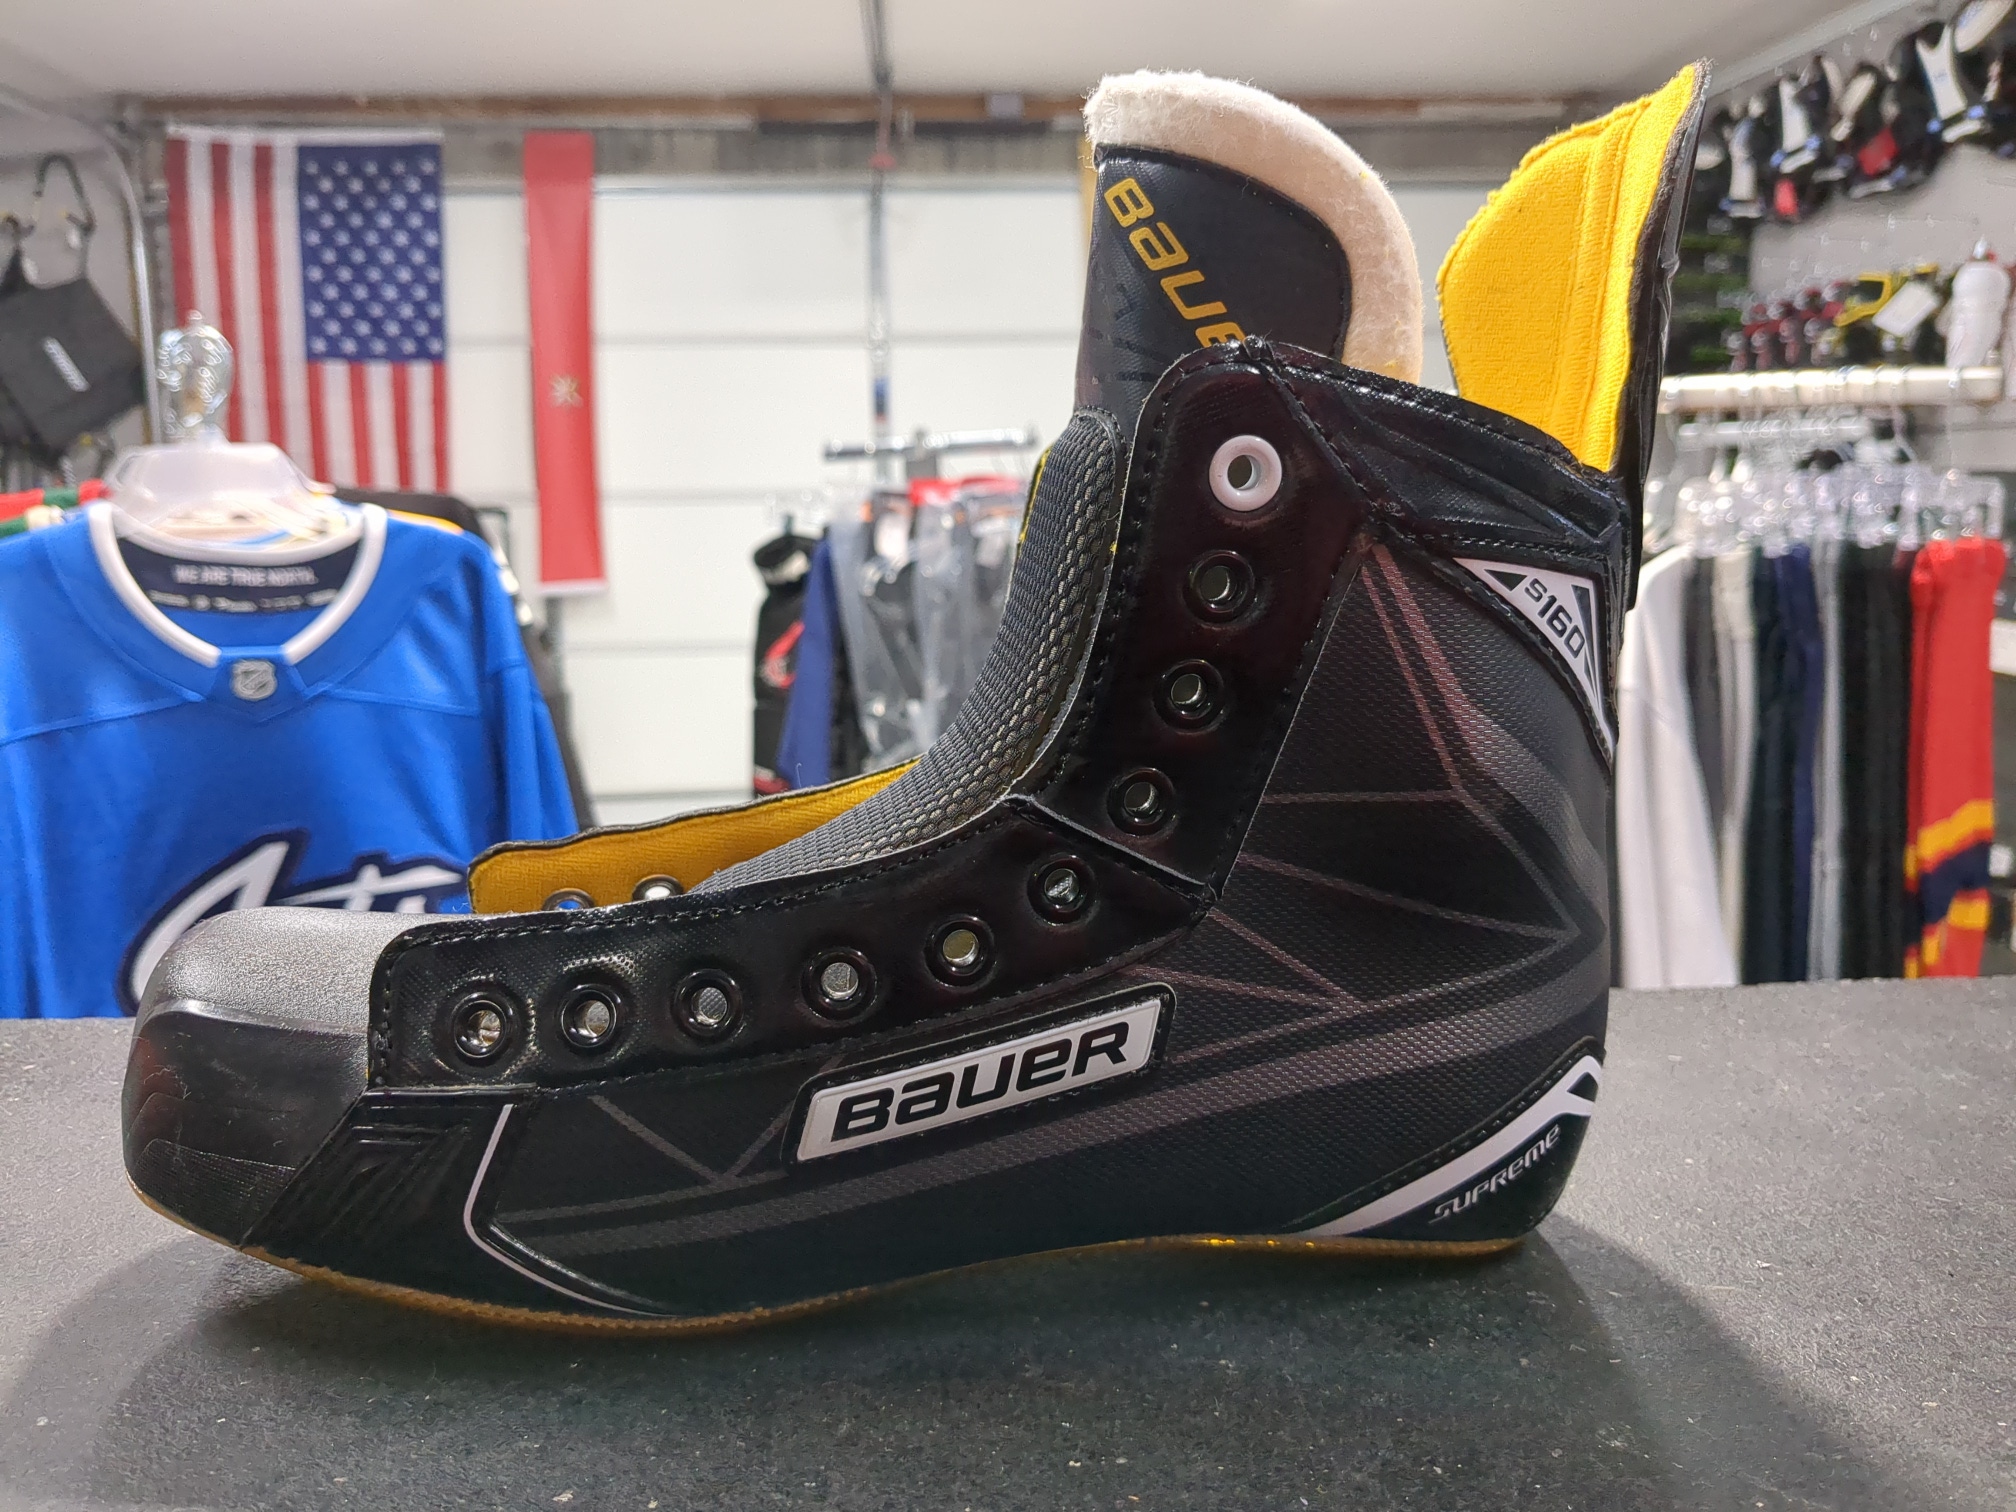 SINGLE BOOT Senior New Bauer Supreme S160 Hockey Skates Regular Width Size 8.5 Left